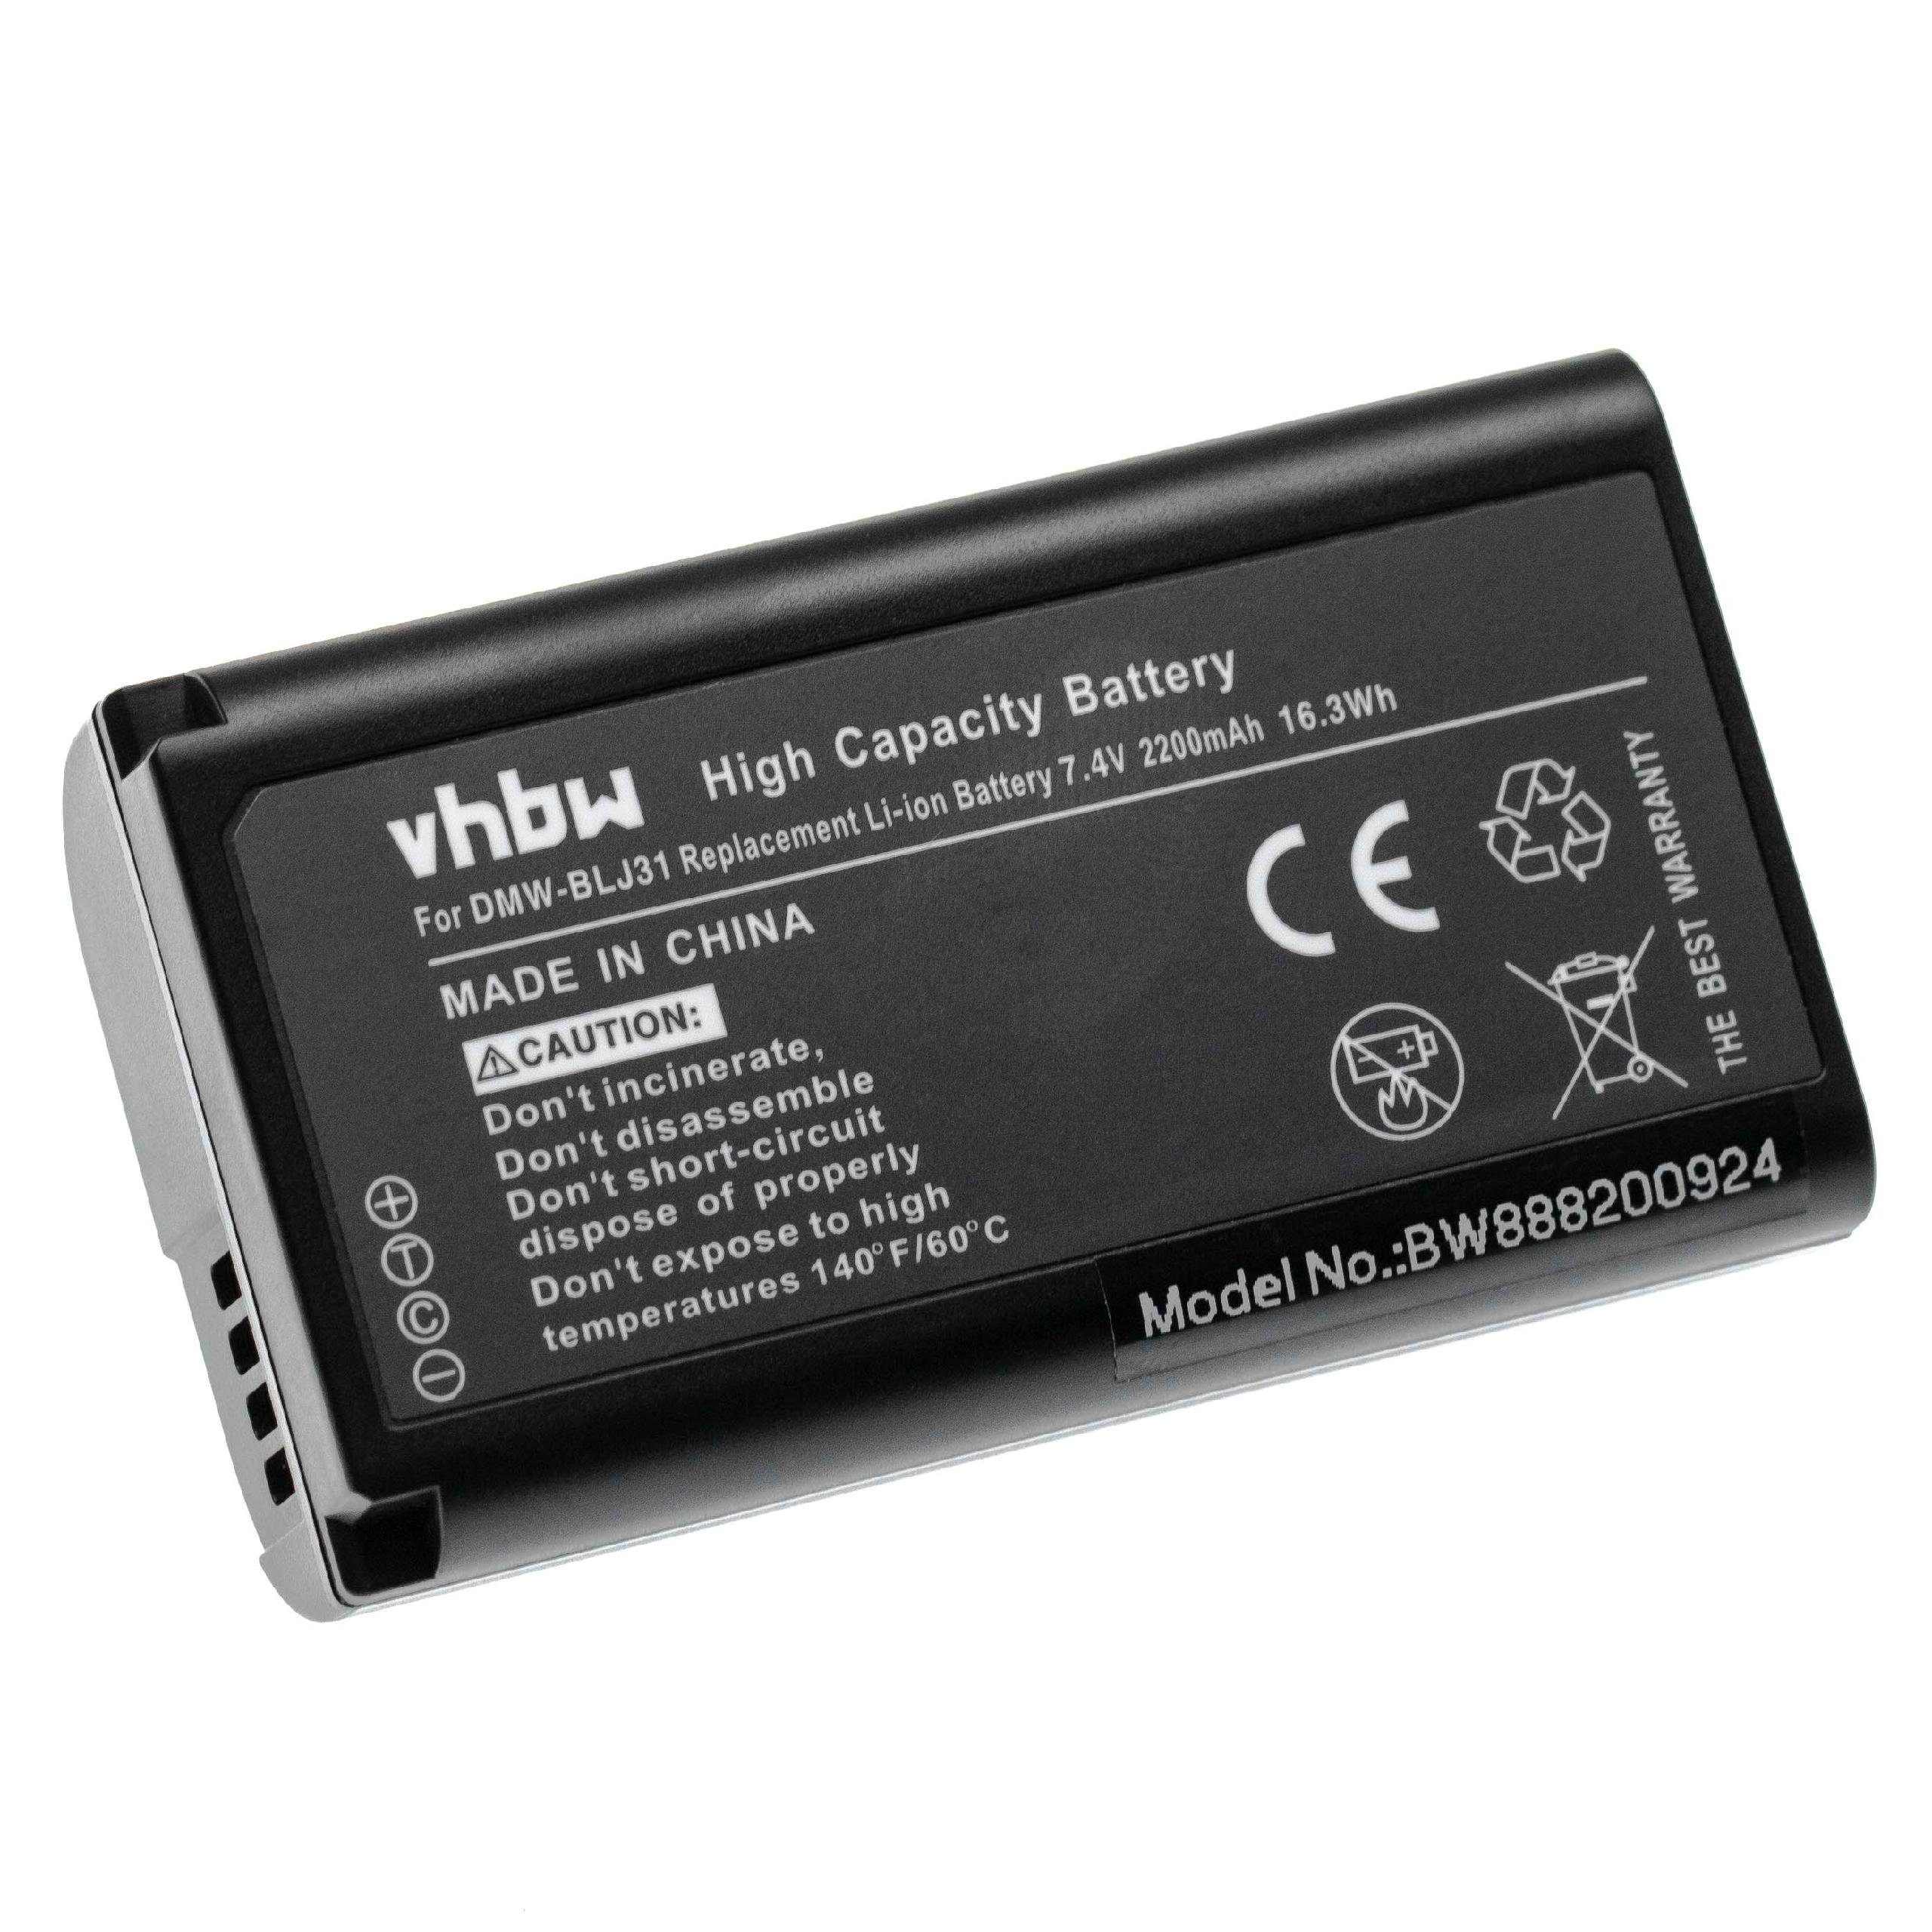 Kamera-Akku Ersatz Panasonic für vhbw DMW-BLJ31 DMW-BLJ31E, 2200 V) (7,4 mAh für Li-Ion